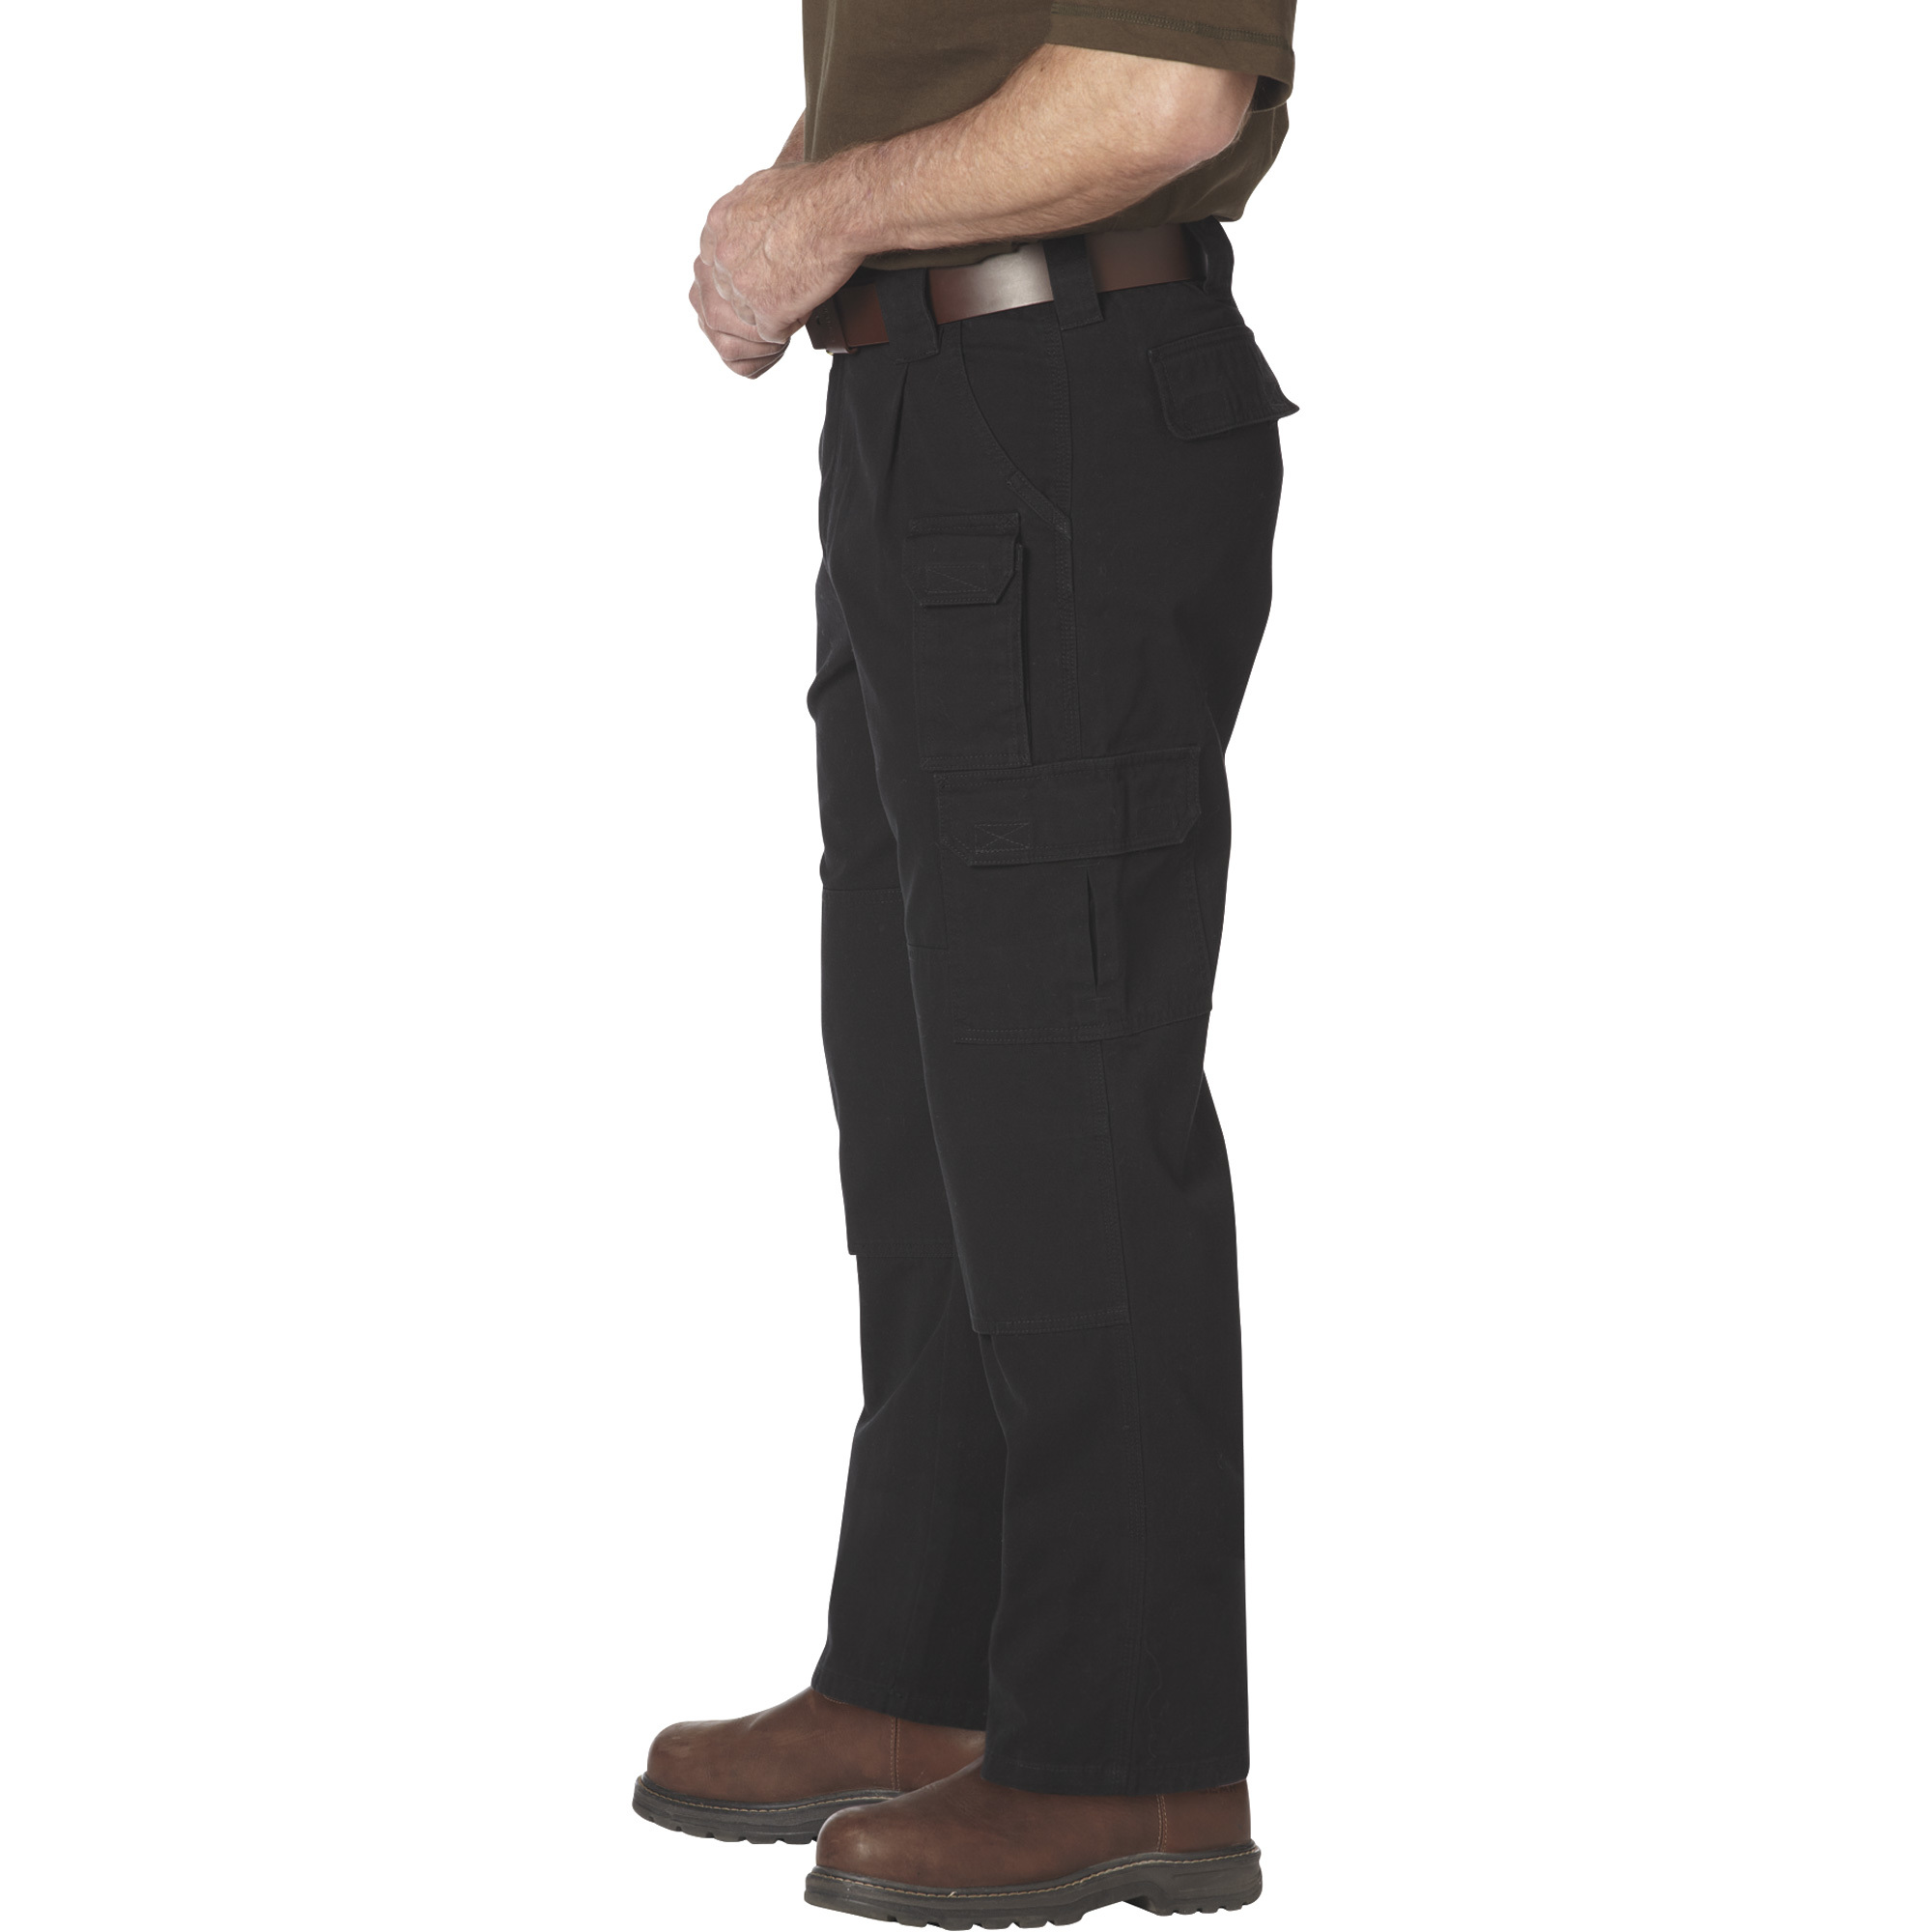 Gravel Gear Men's 7-Pocket Tactical Pants with Teflon - Black, 40Inch Waist x 30Inch Inseam